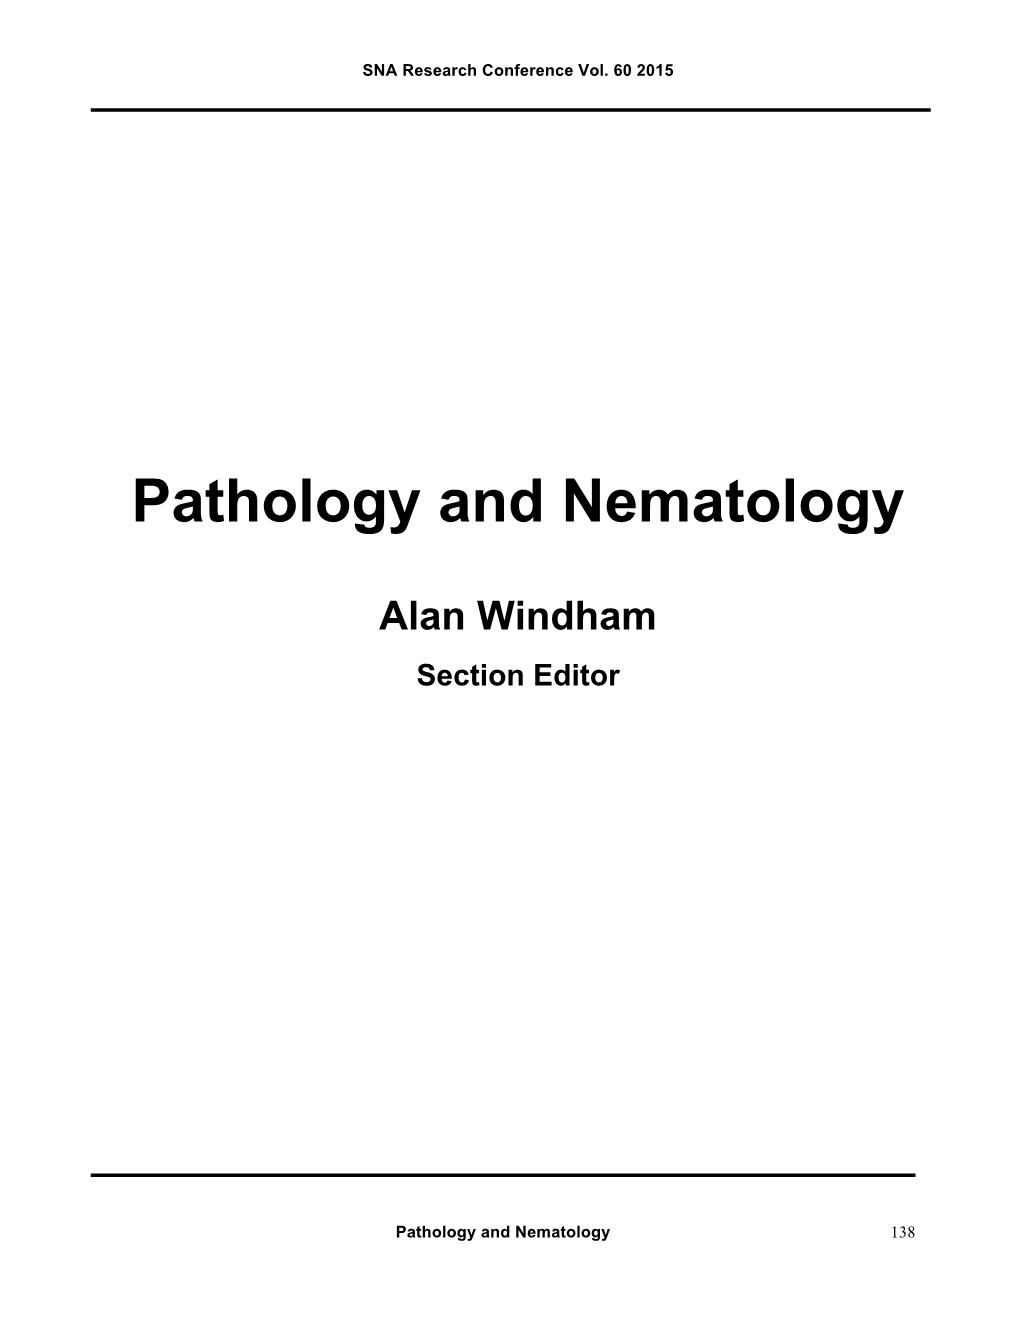 Pathology and Nematology